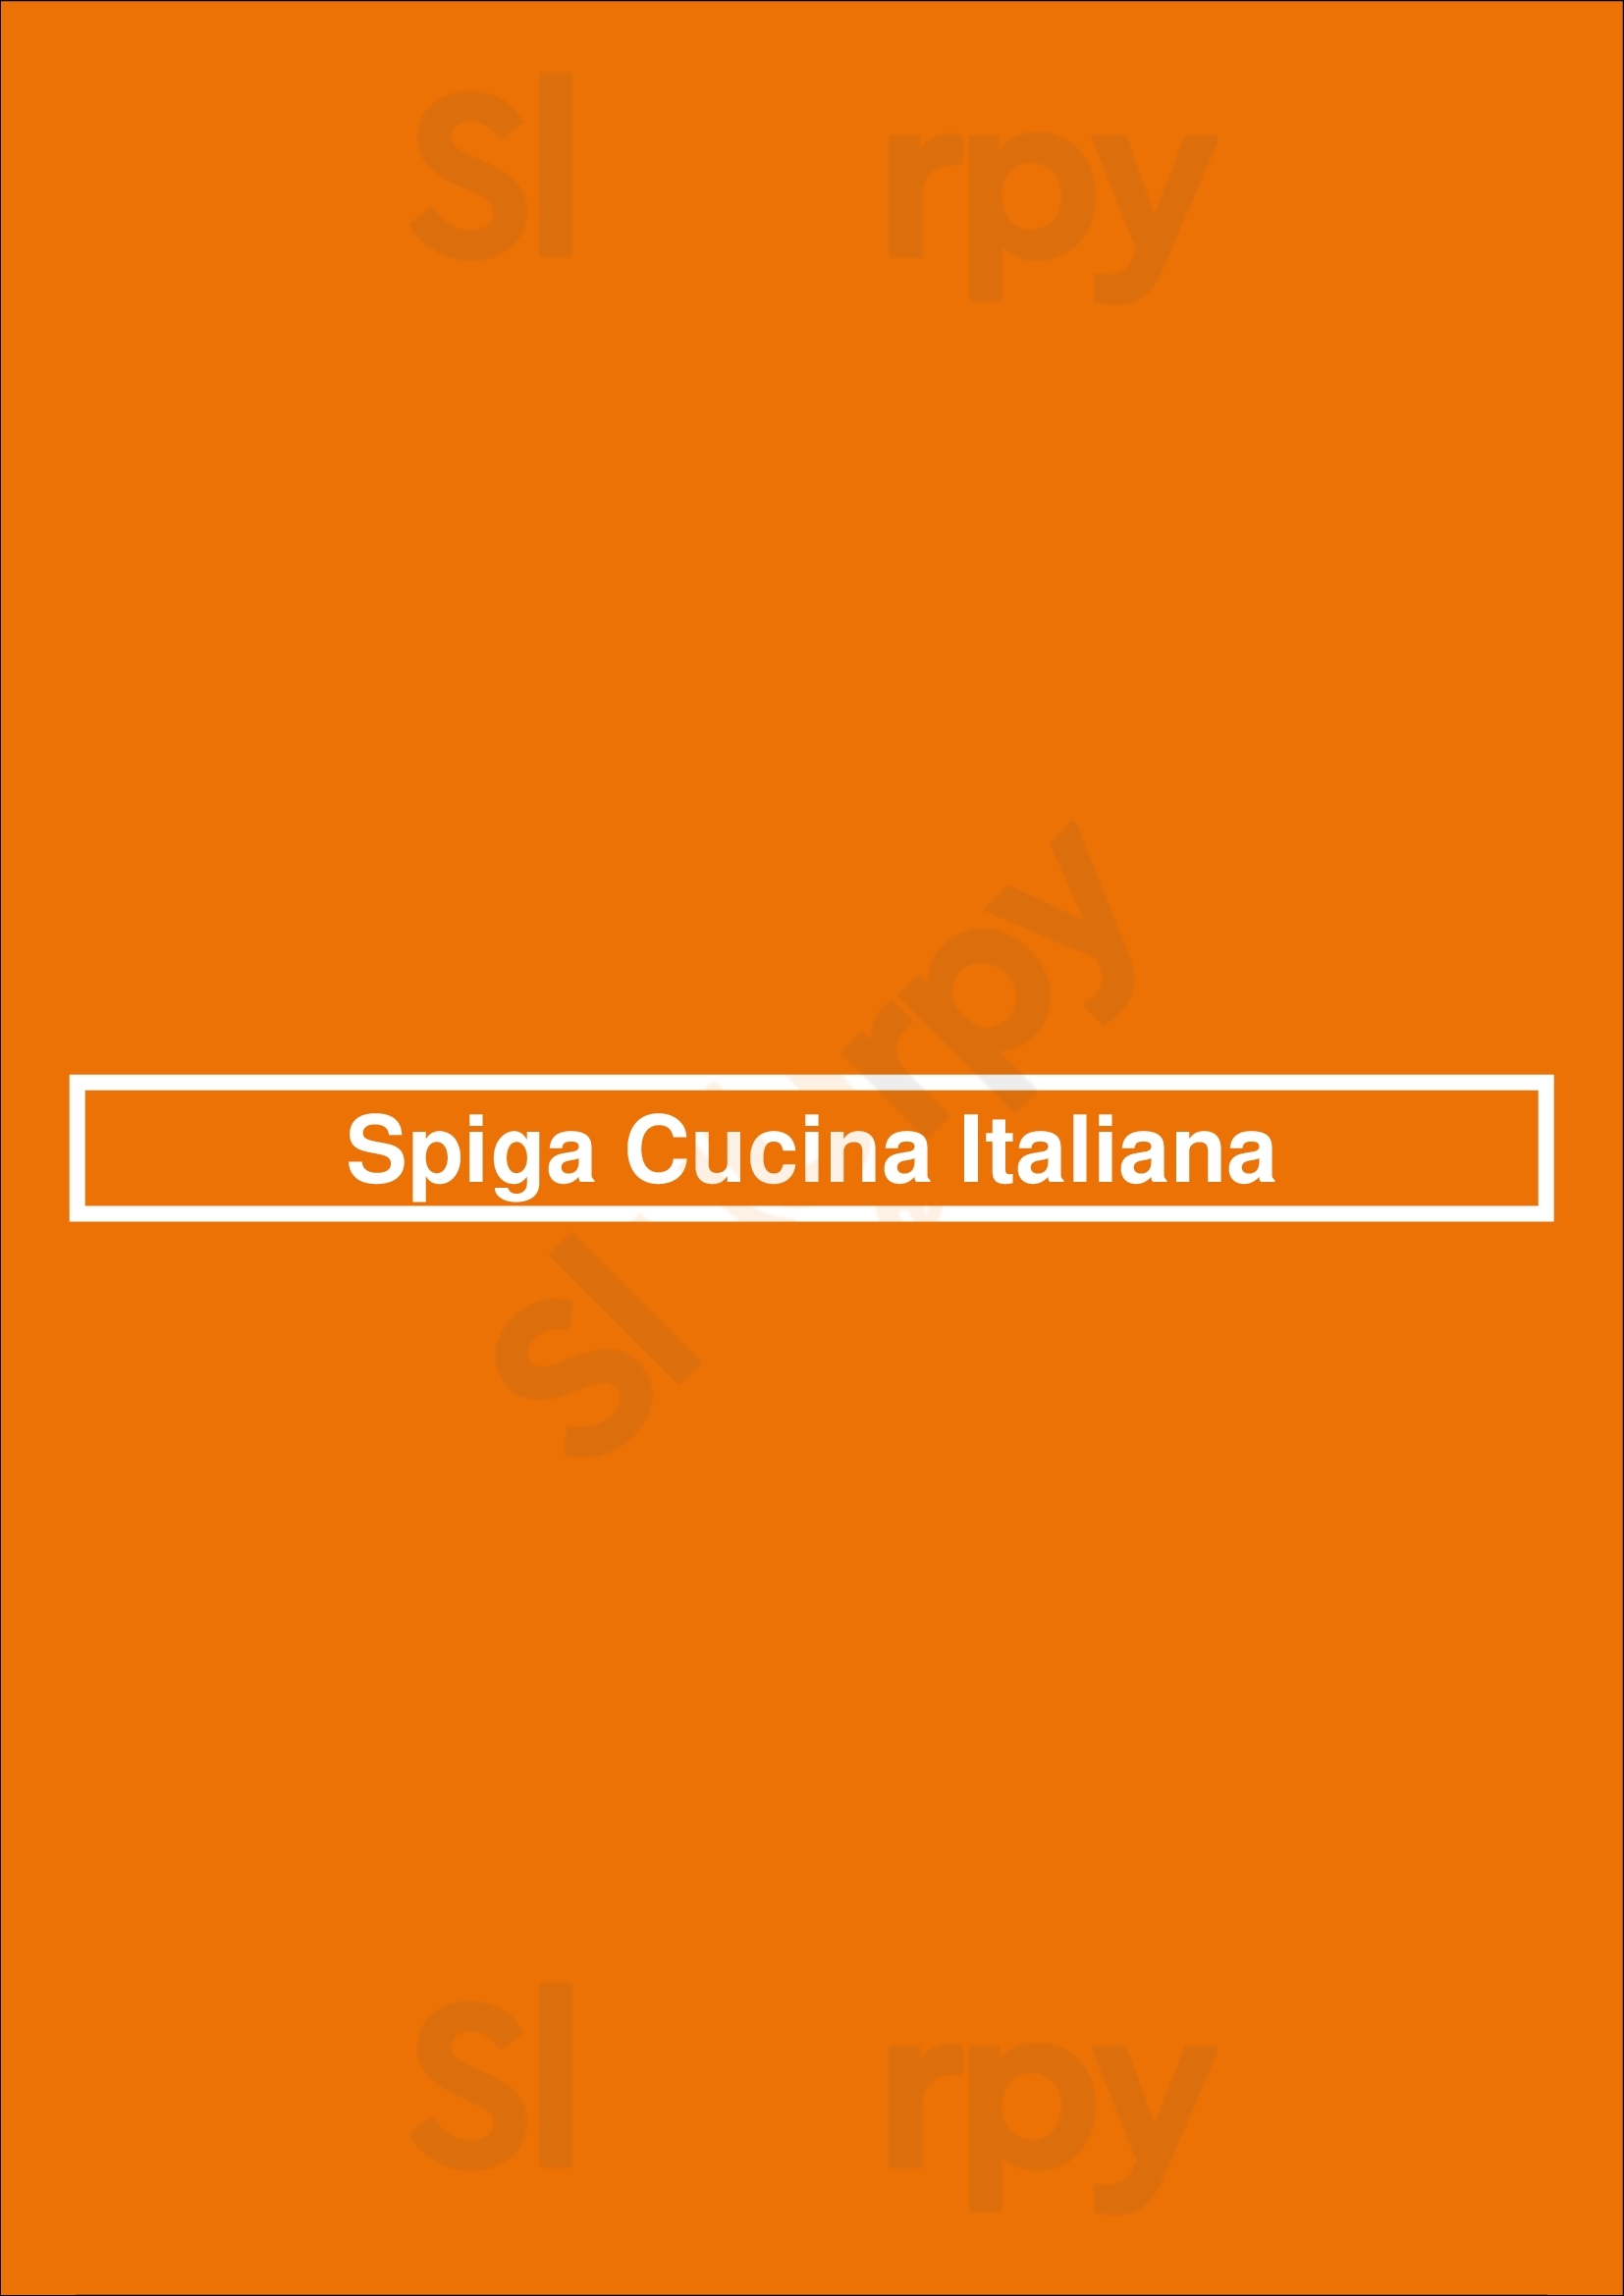 Spiga Cucina Italiana Scottsdale Menu - 1